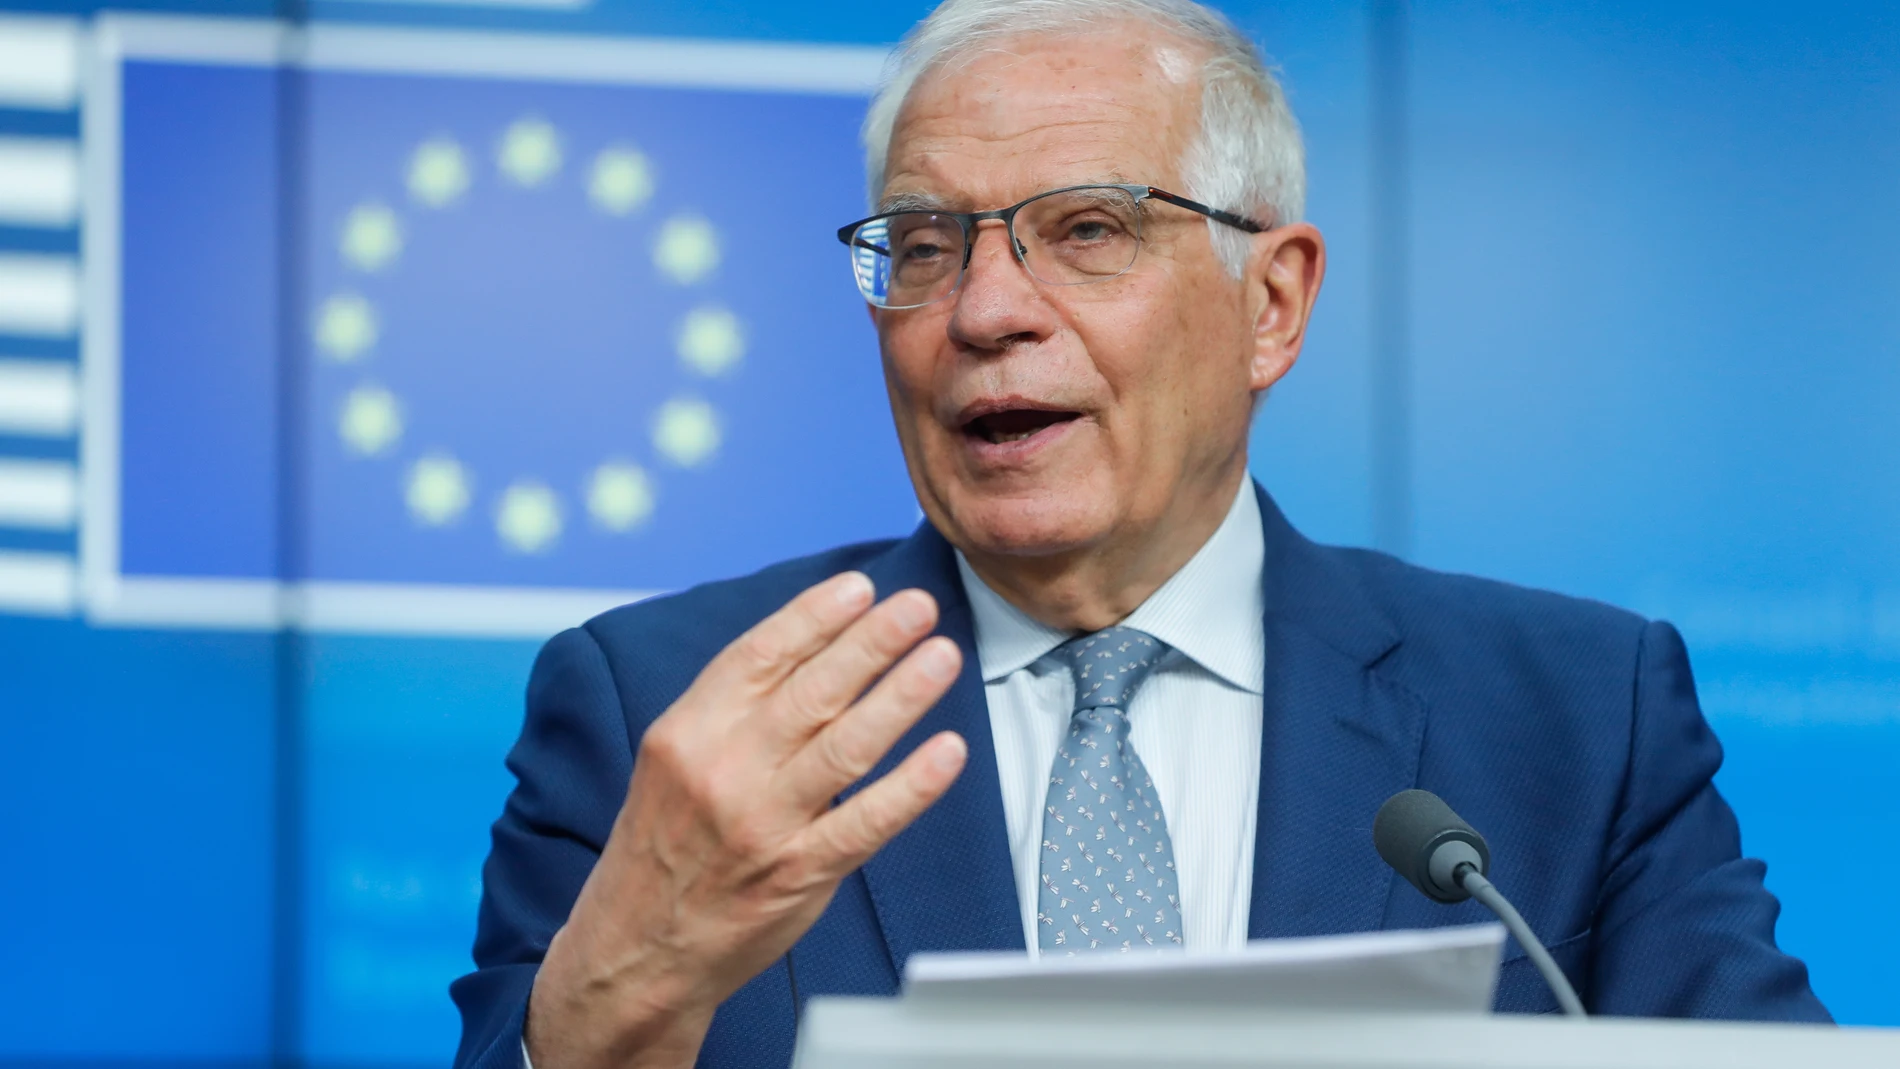 El máximo representante de la diplomacia comunitaria, Josep Borrell